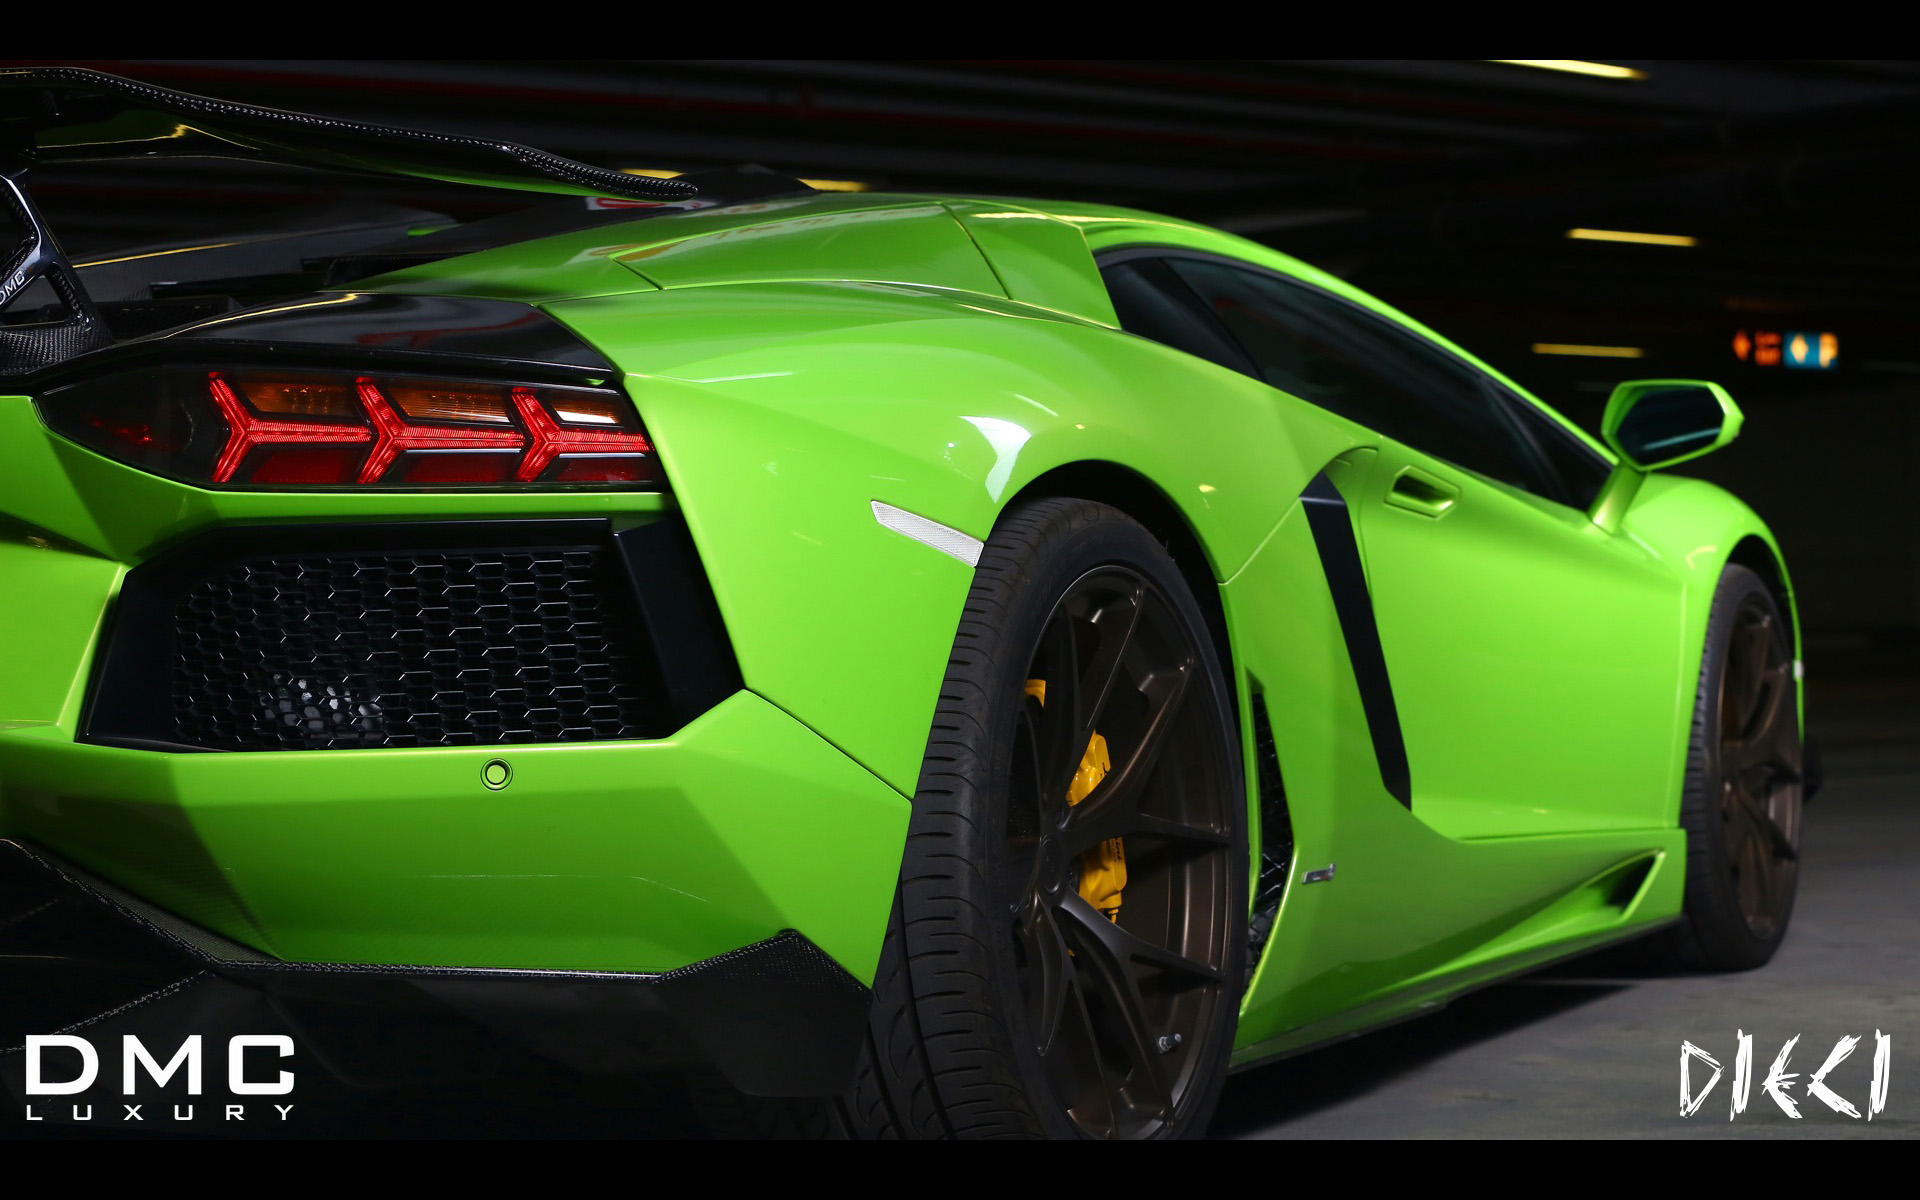 2013, Dmc, Lamborghini, Aventador, Lp700 4, Dieci, Supercar Wallpaper